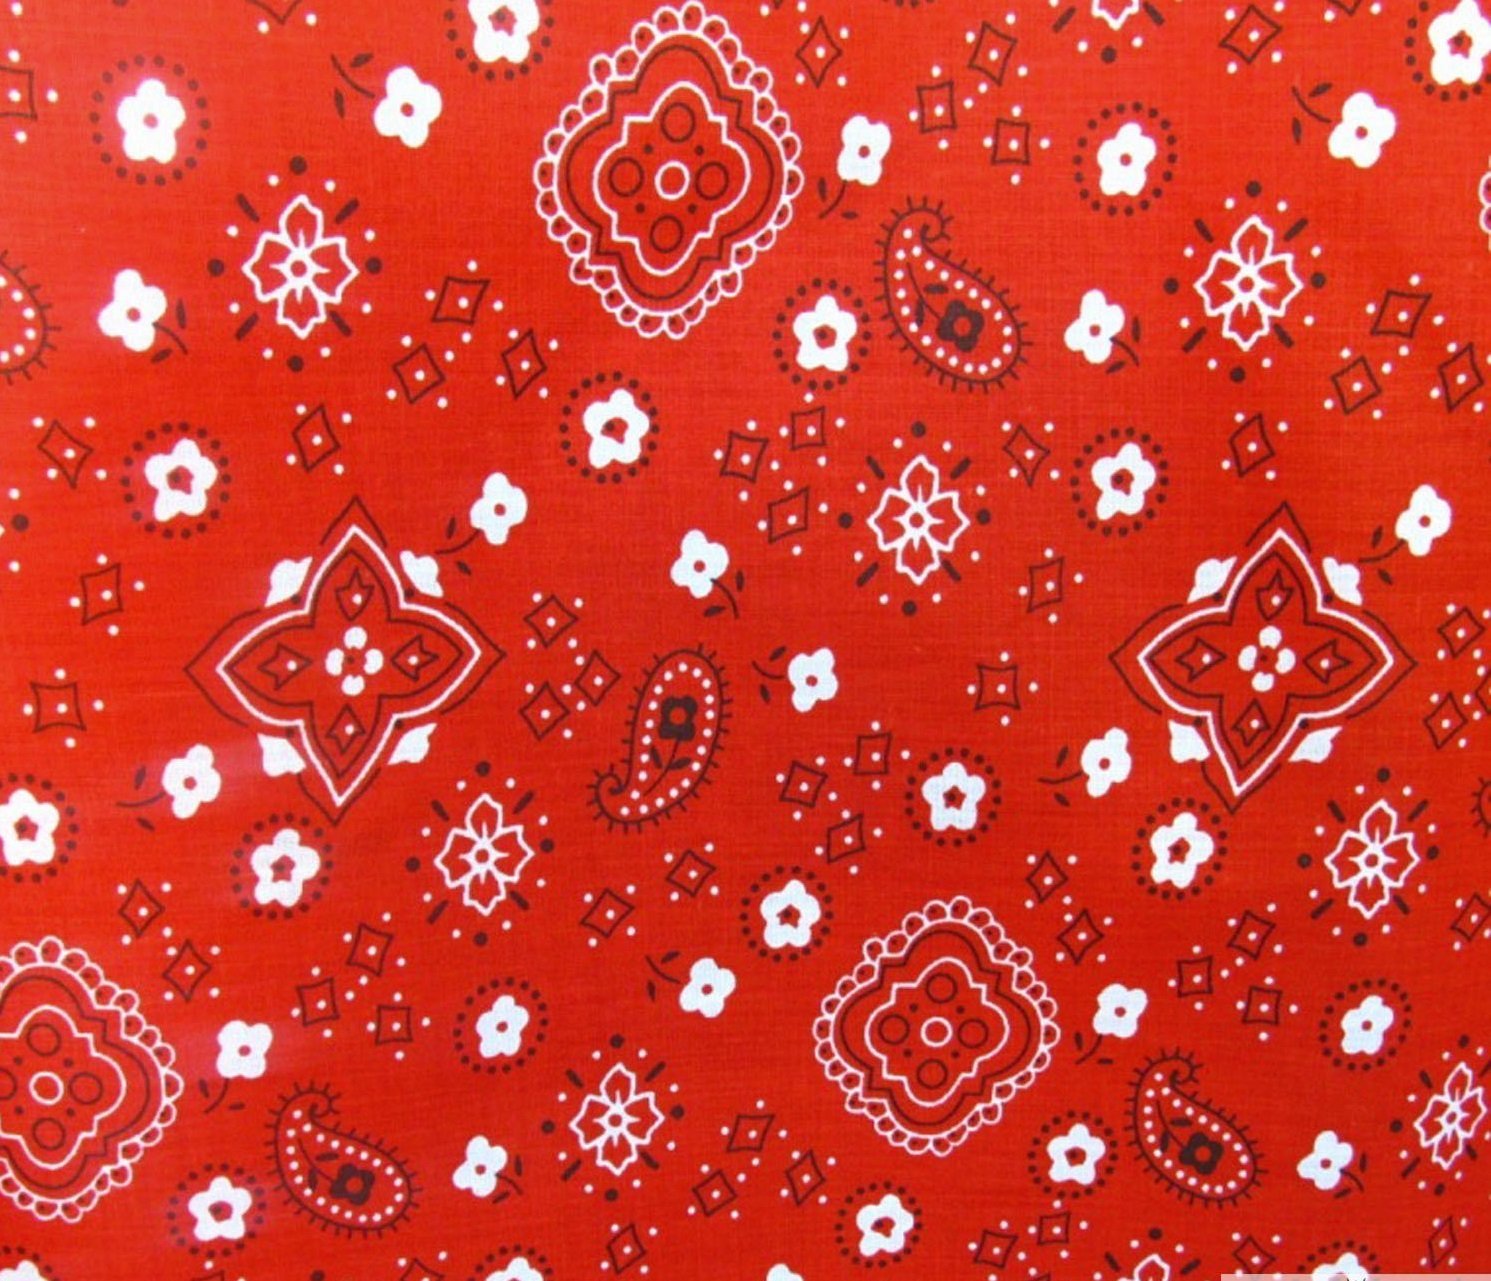 Red Bandana Wallpaper